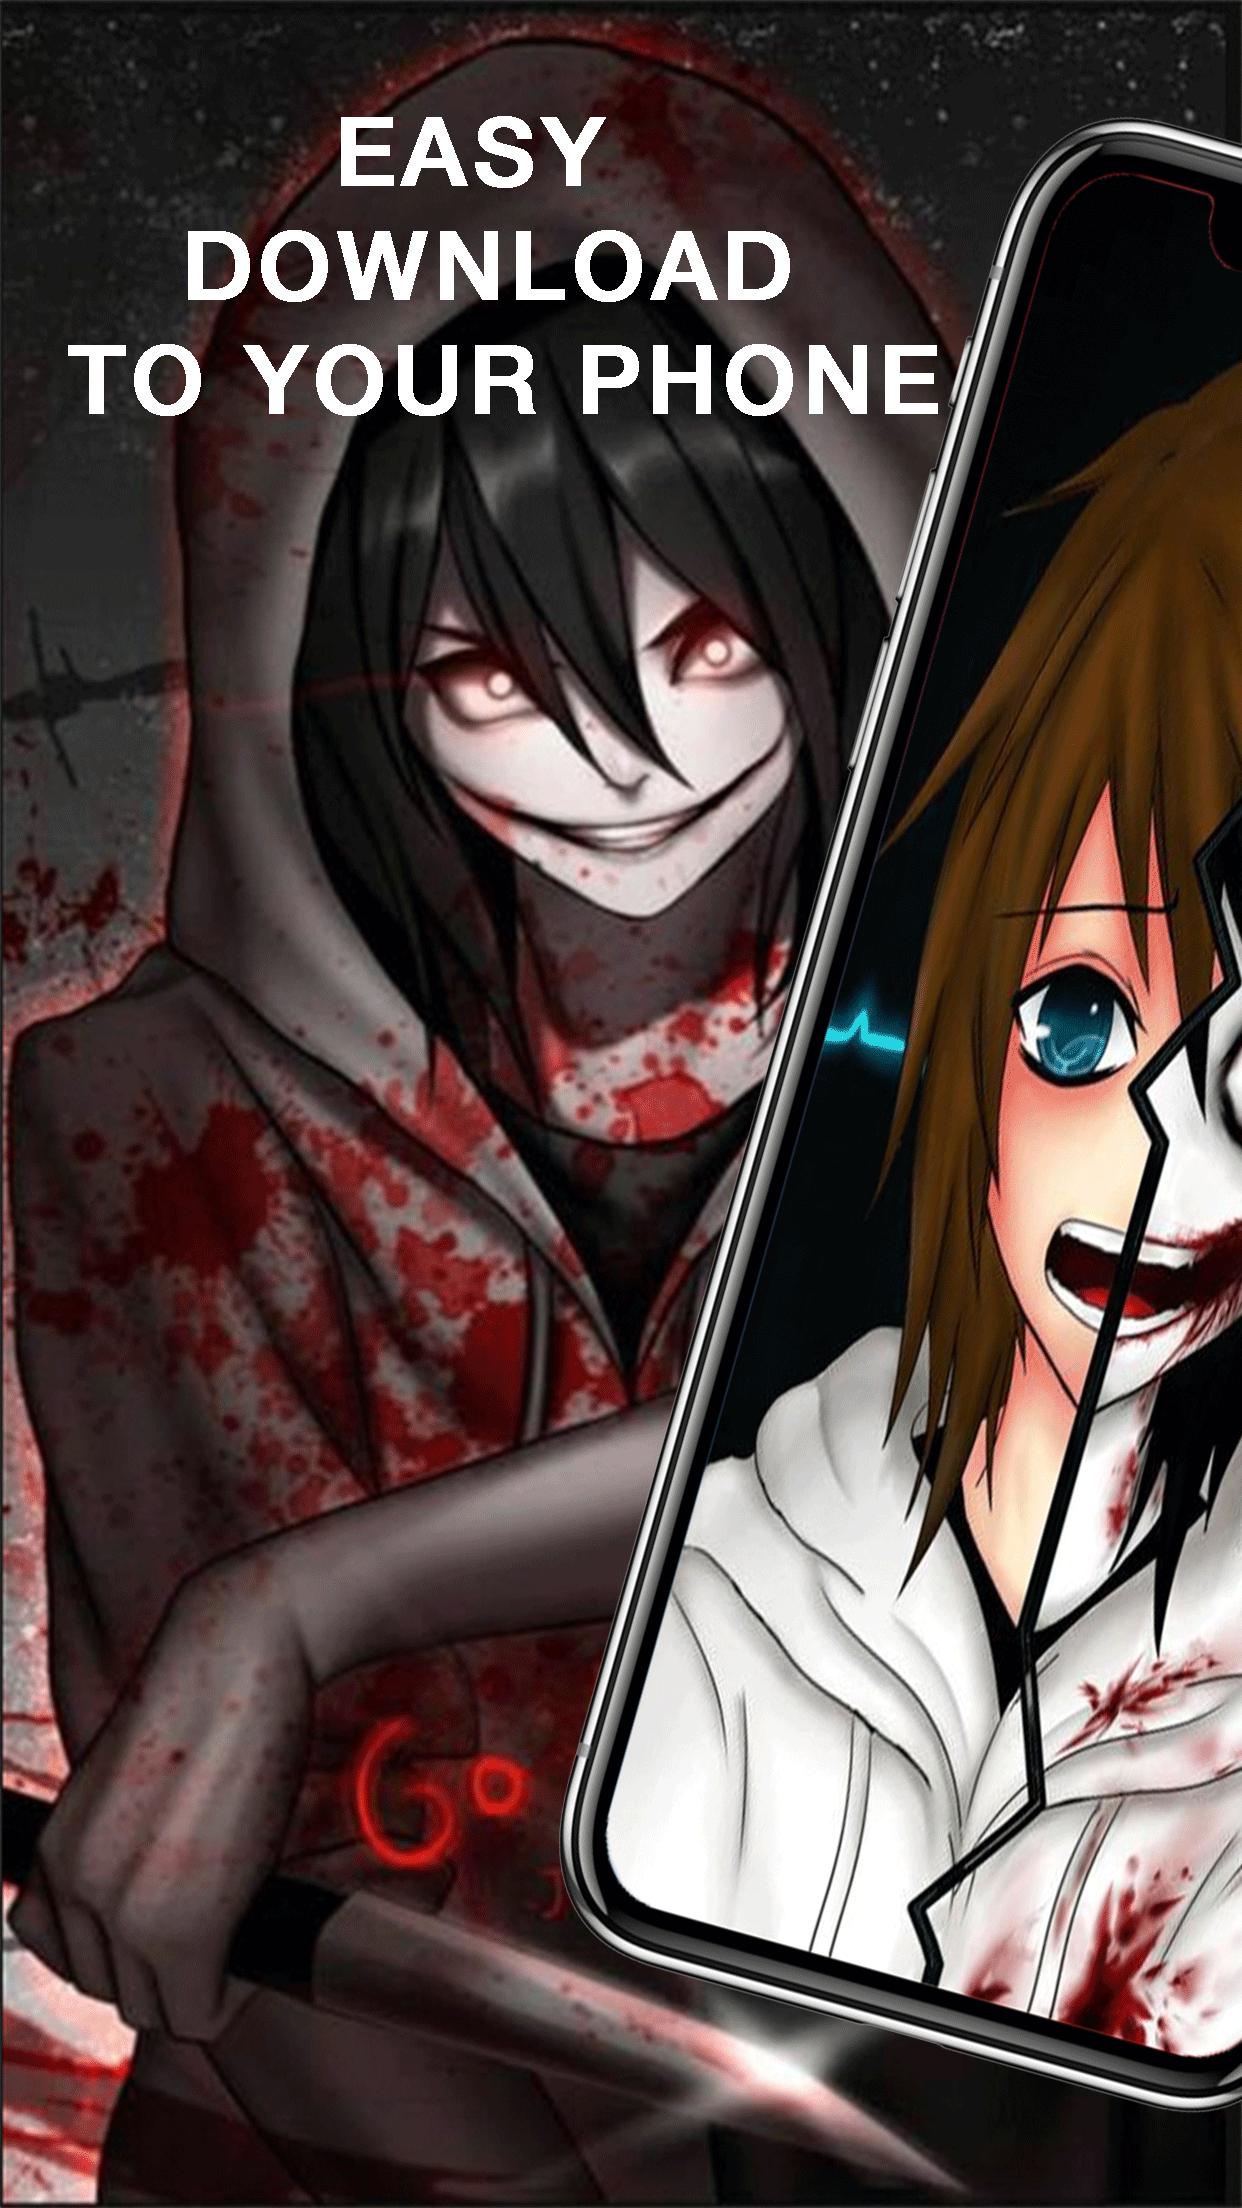 Jeff Wallpapers Creepypasta The Killer Anime For Android Apk Download - anime killer roblox girl